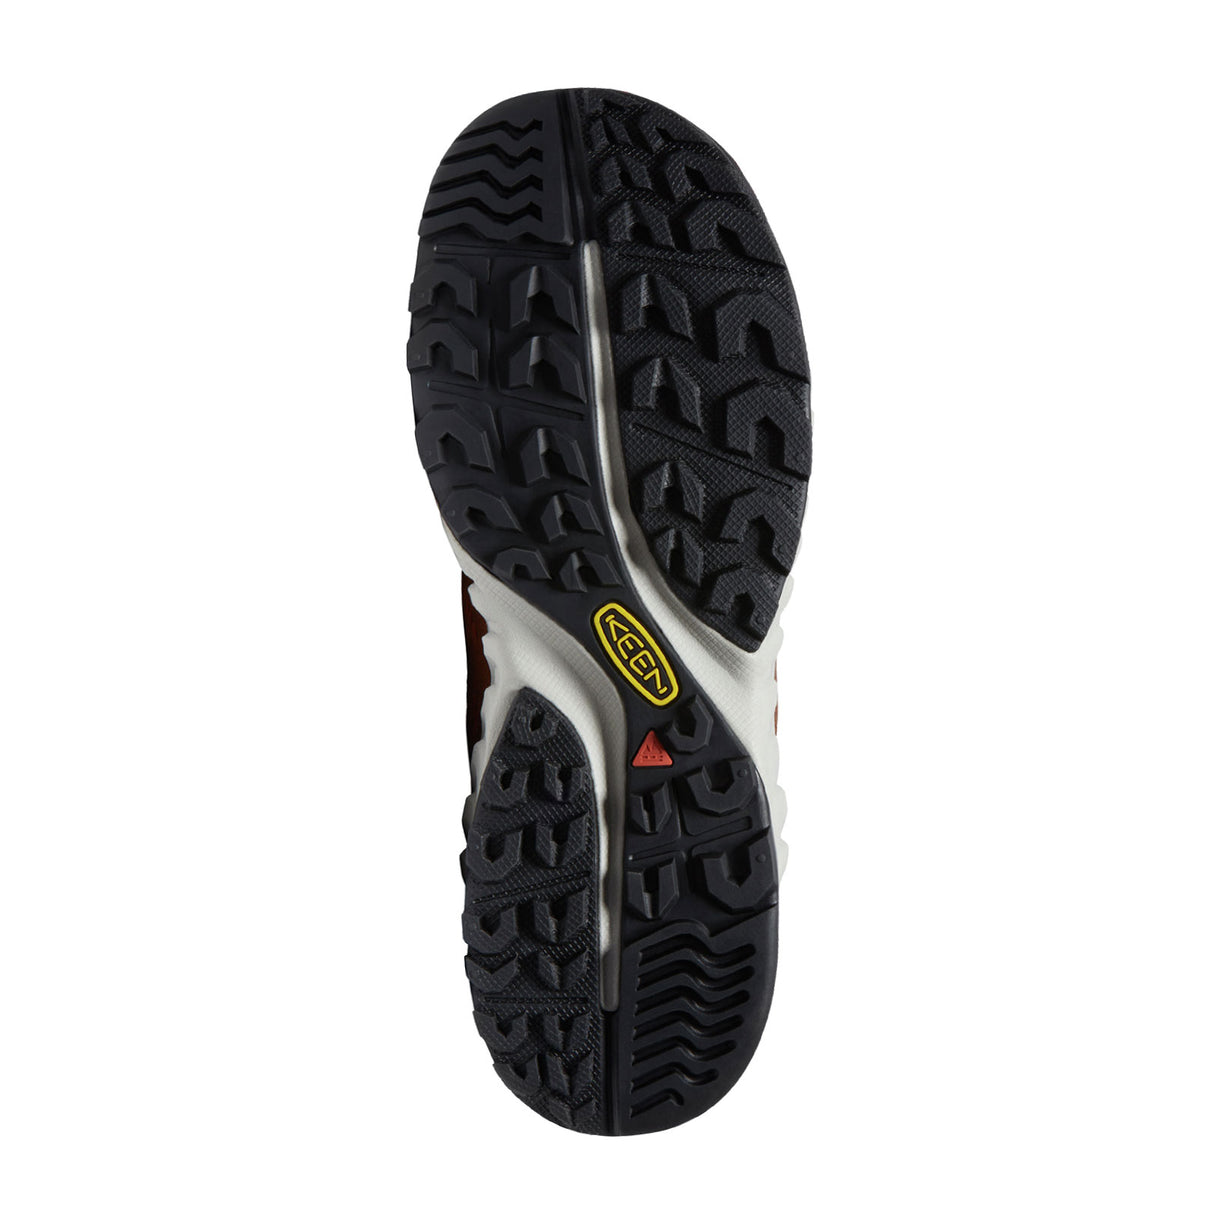 Keen NXIS Speed Hiking Shoe (Men) - Scarlet Ibis/Ombre Athletic - Hiking - The Heel Shoe Fitters